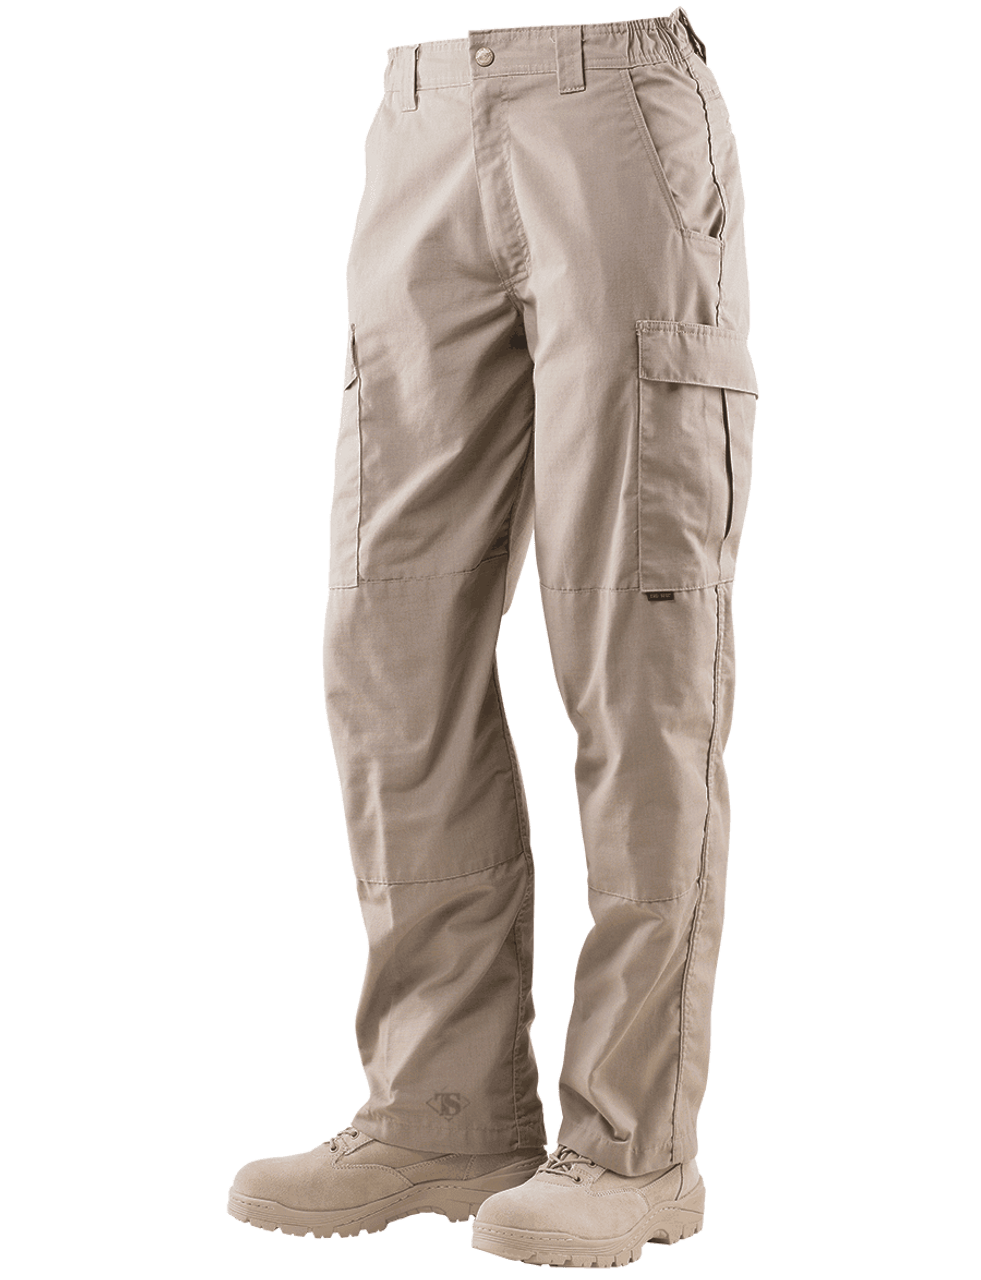 Tru-Spec 1026 Men's Simply Tactical Khaki Cargo Pants